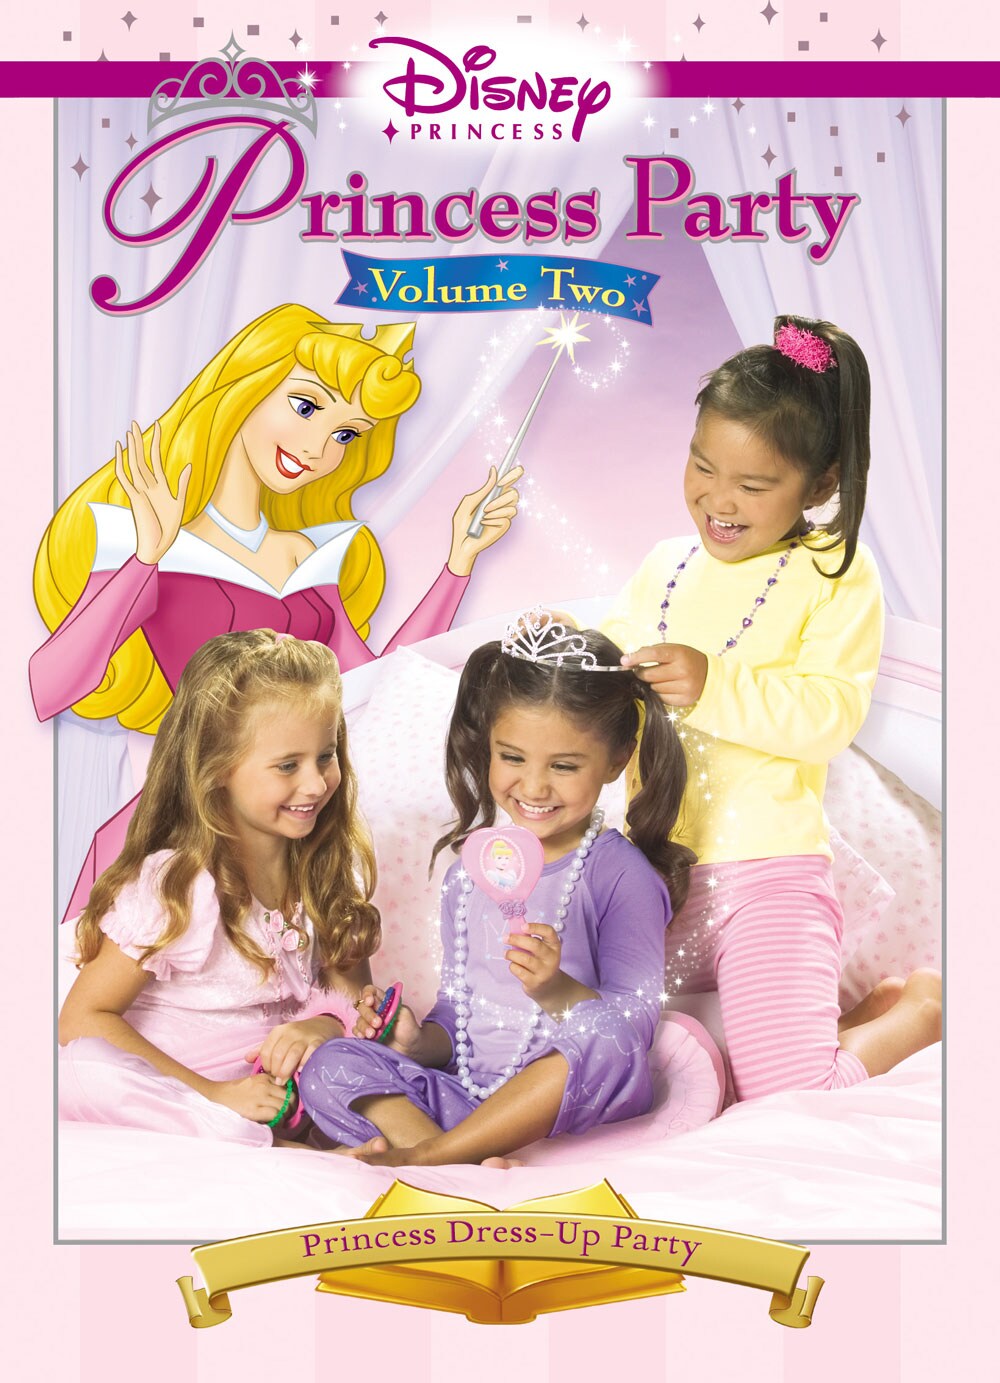 Disney Princess | Princess Party Volume 2 | Princess Dress-Up Party movie poster